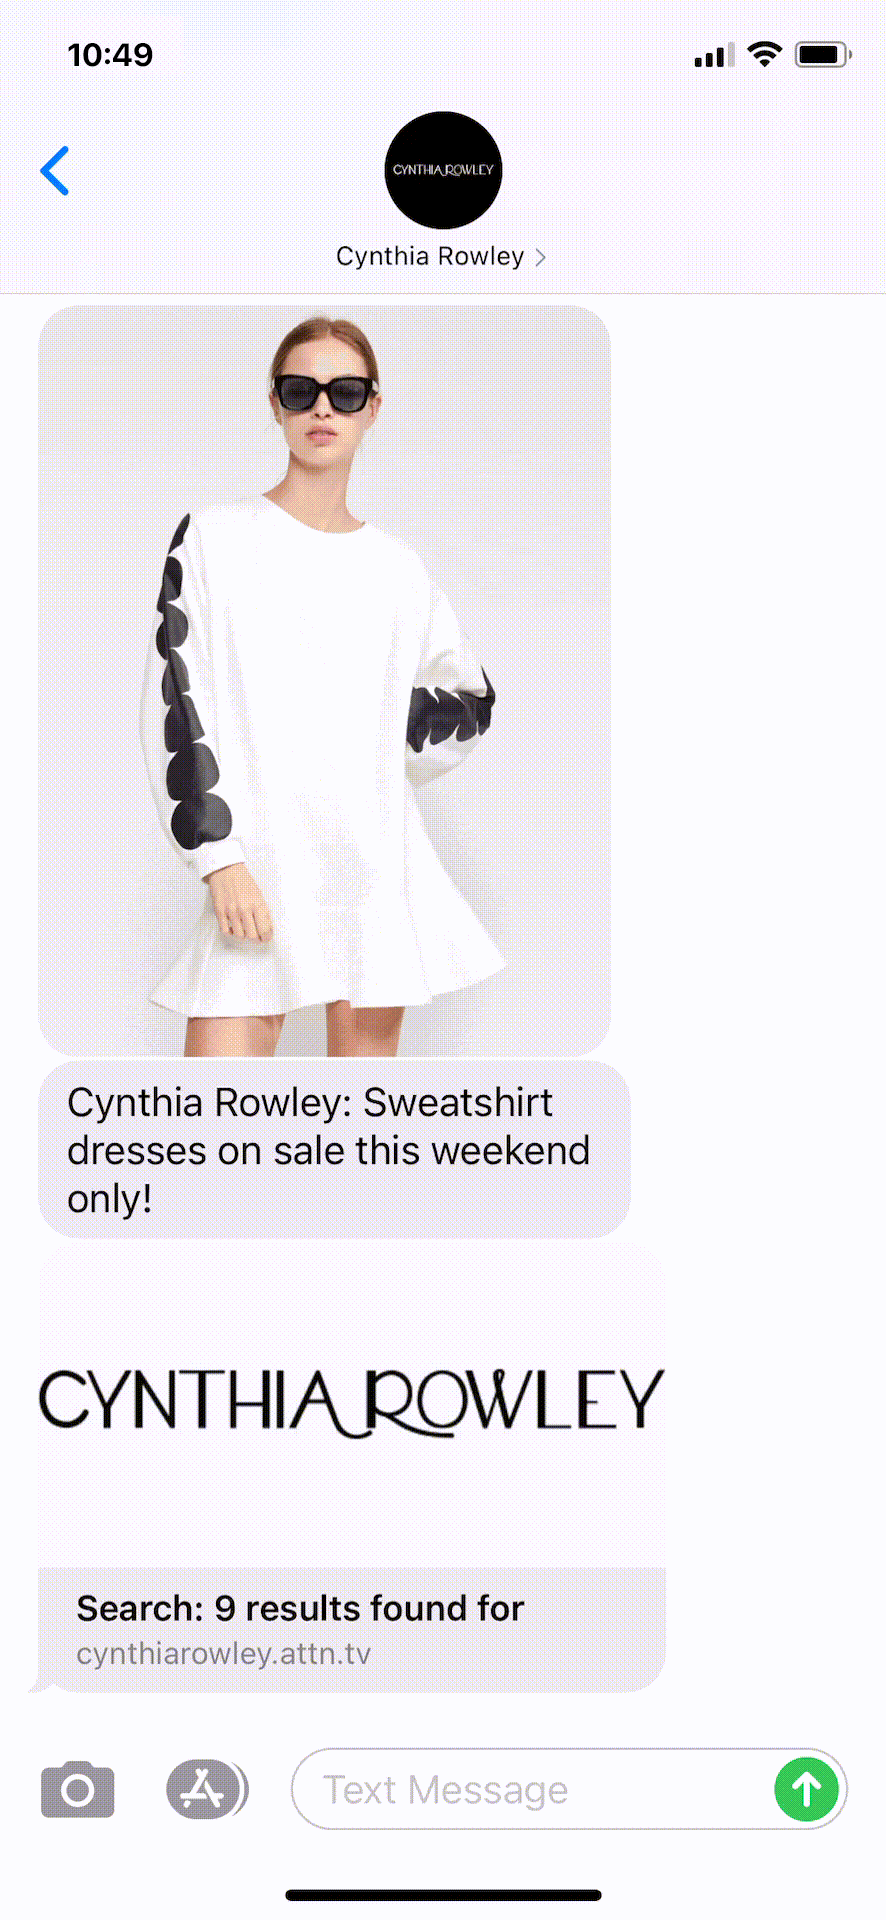 Cynthia-Rowley-Text-Message-Marketing-Example-03.26.2021